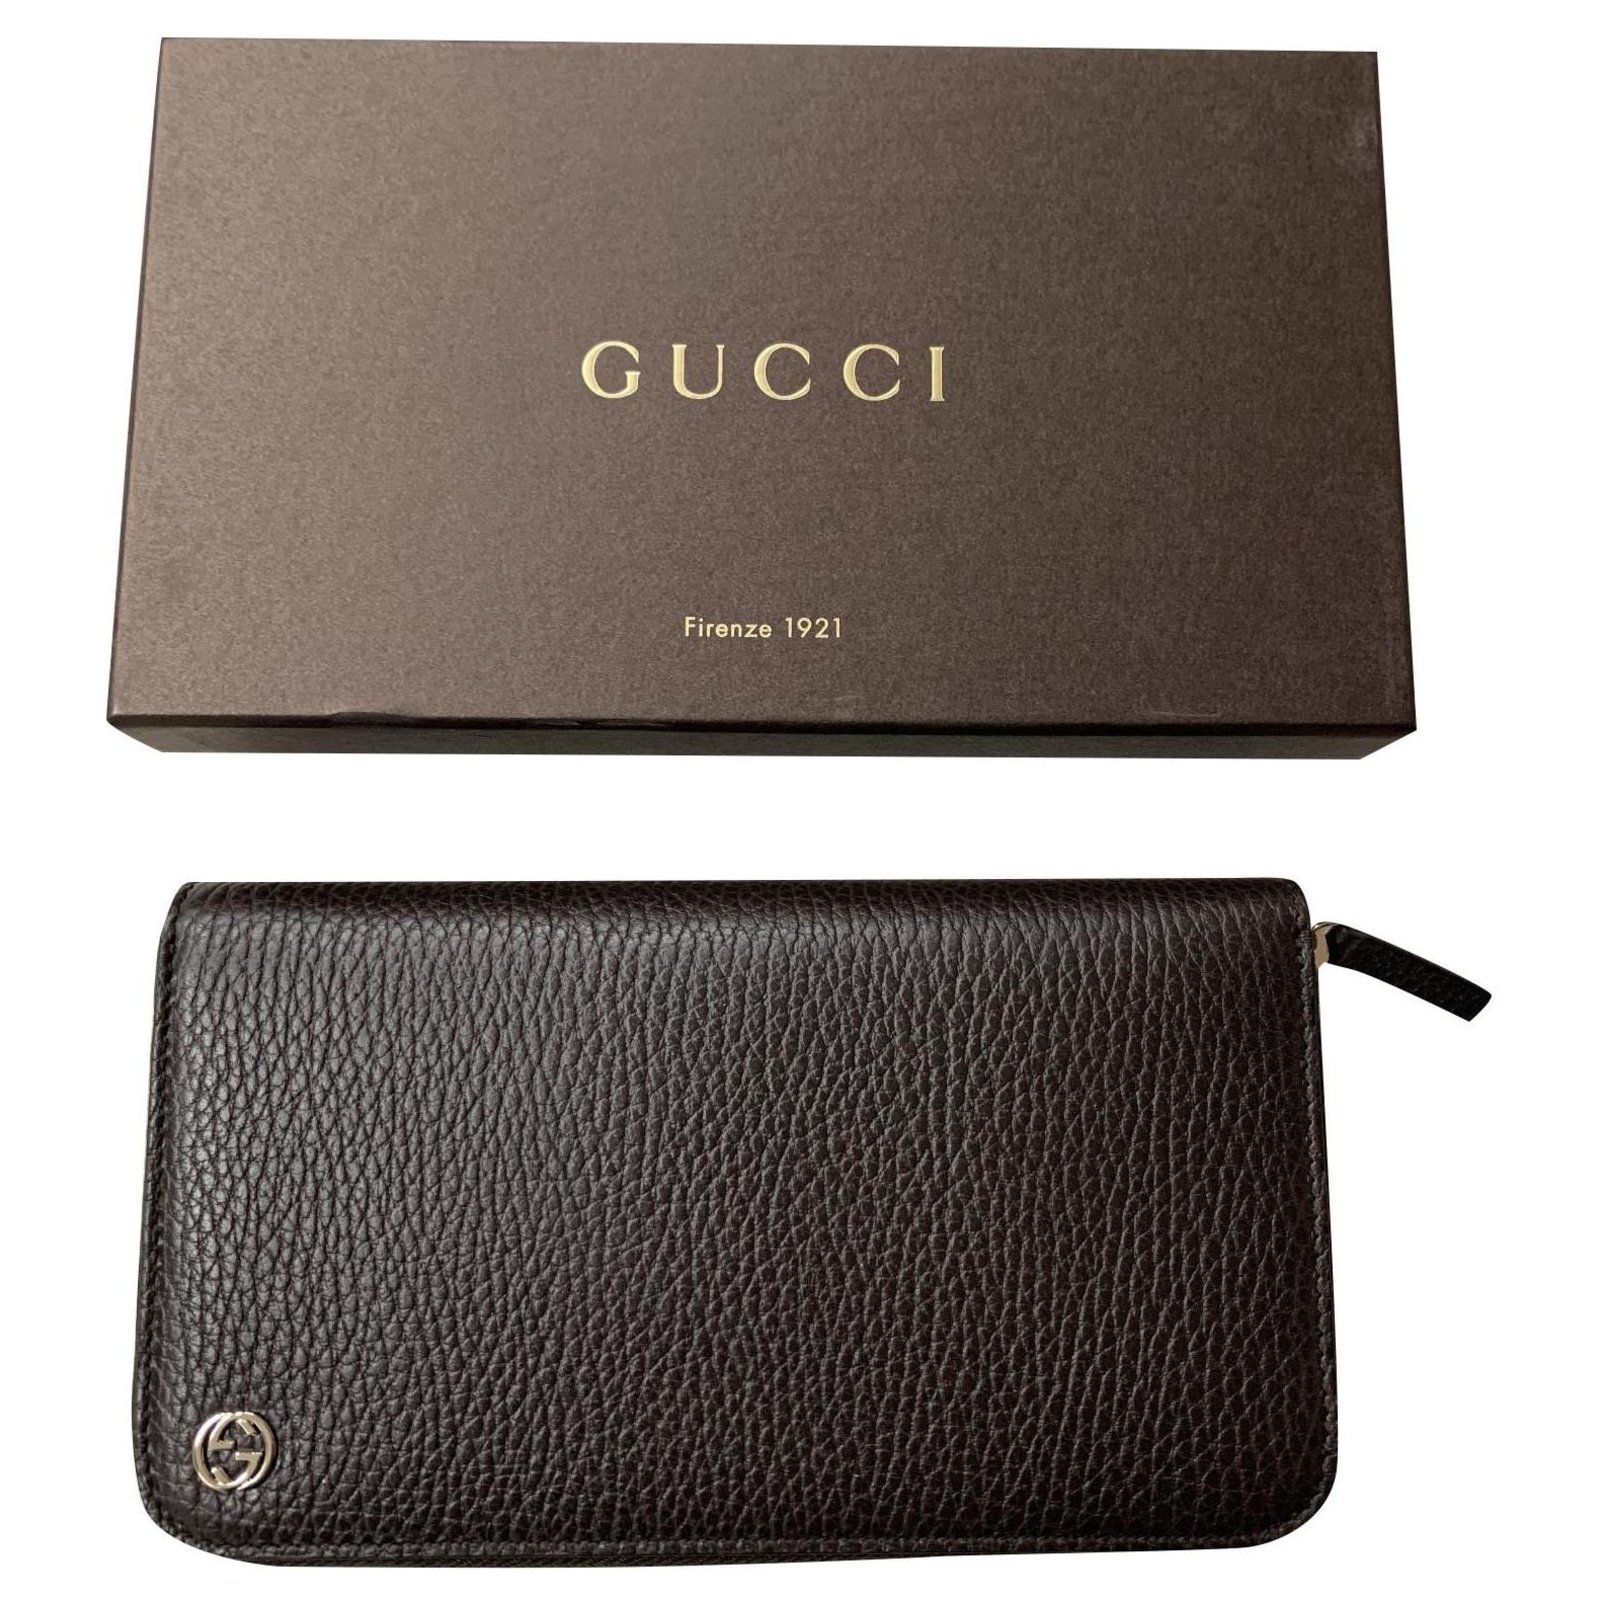 Gucci gucci Leather zip around wallet 